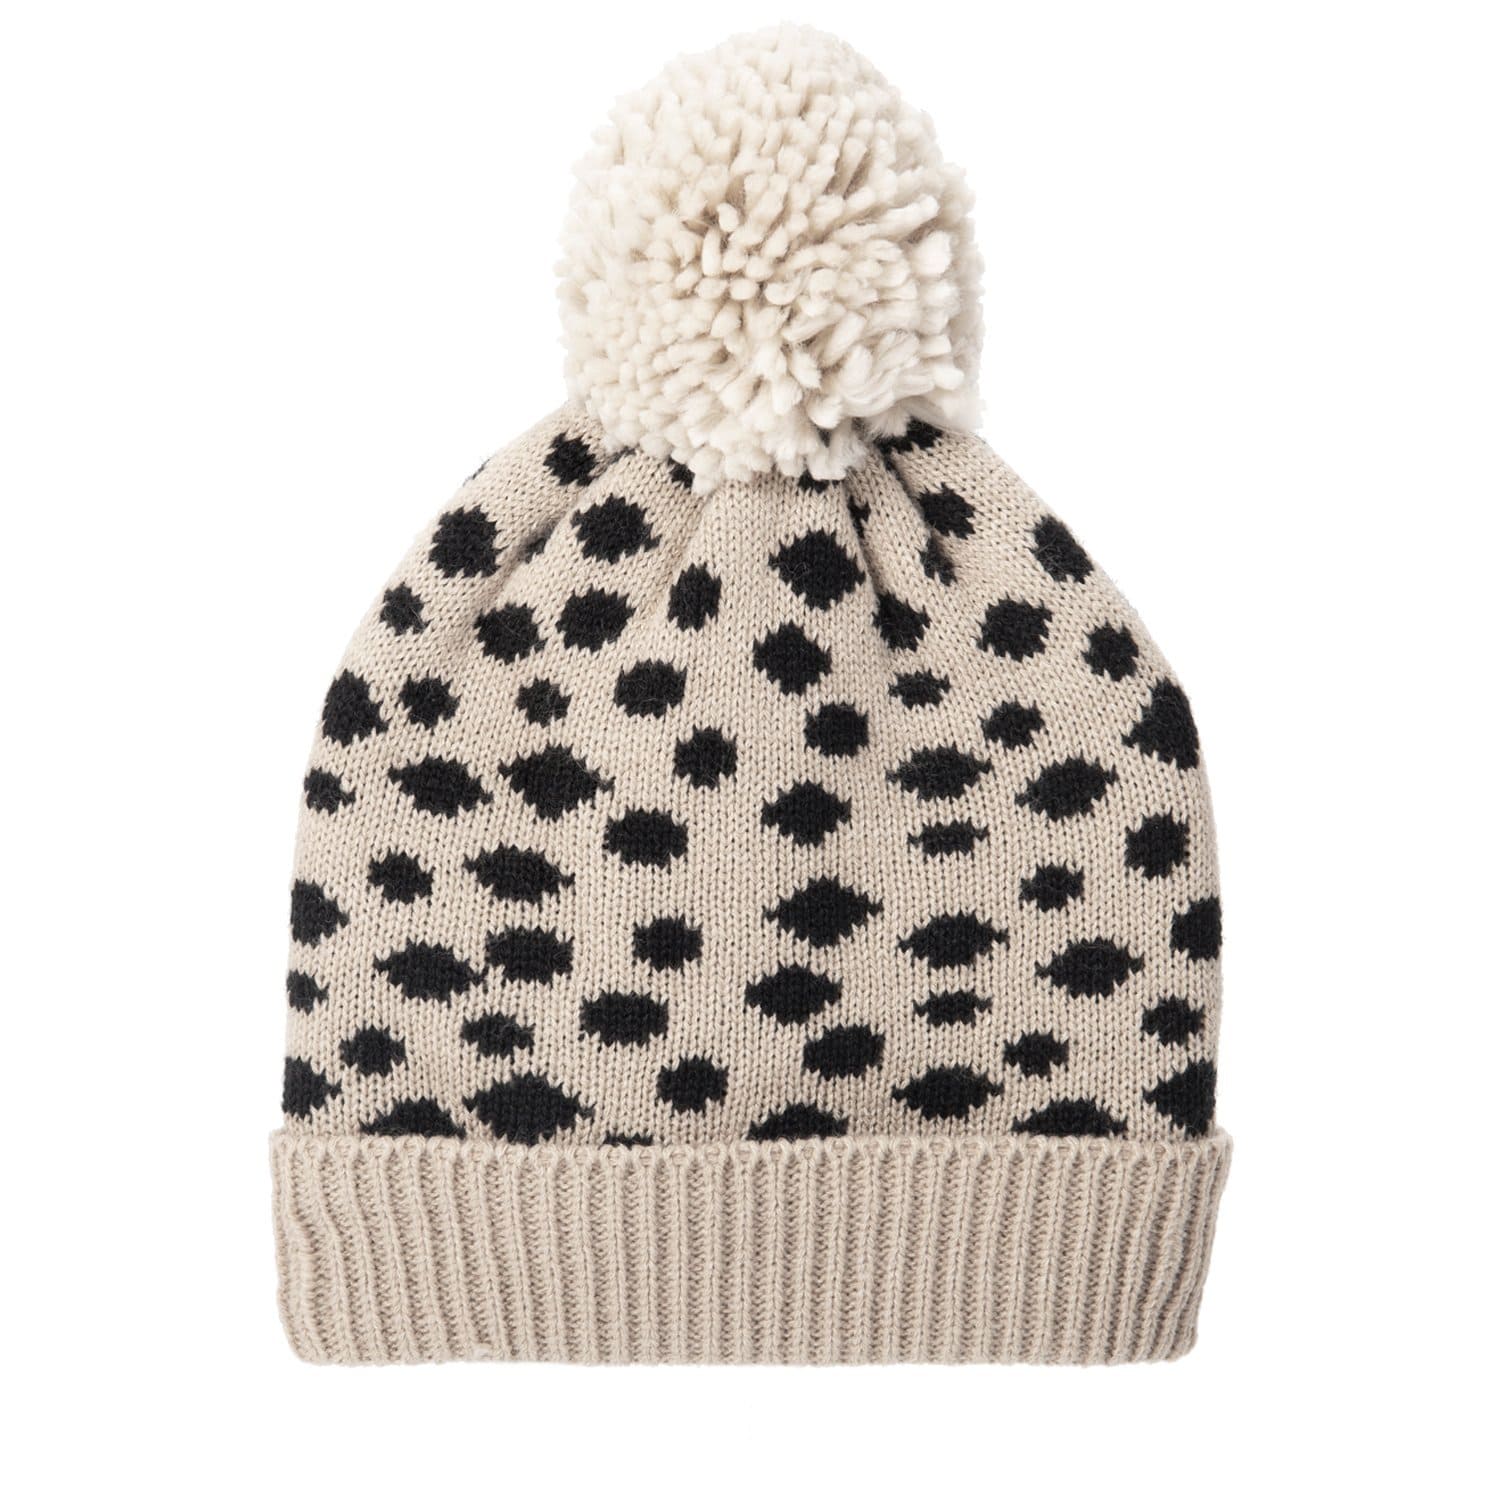 Cheetah Knit Hat